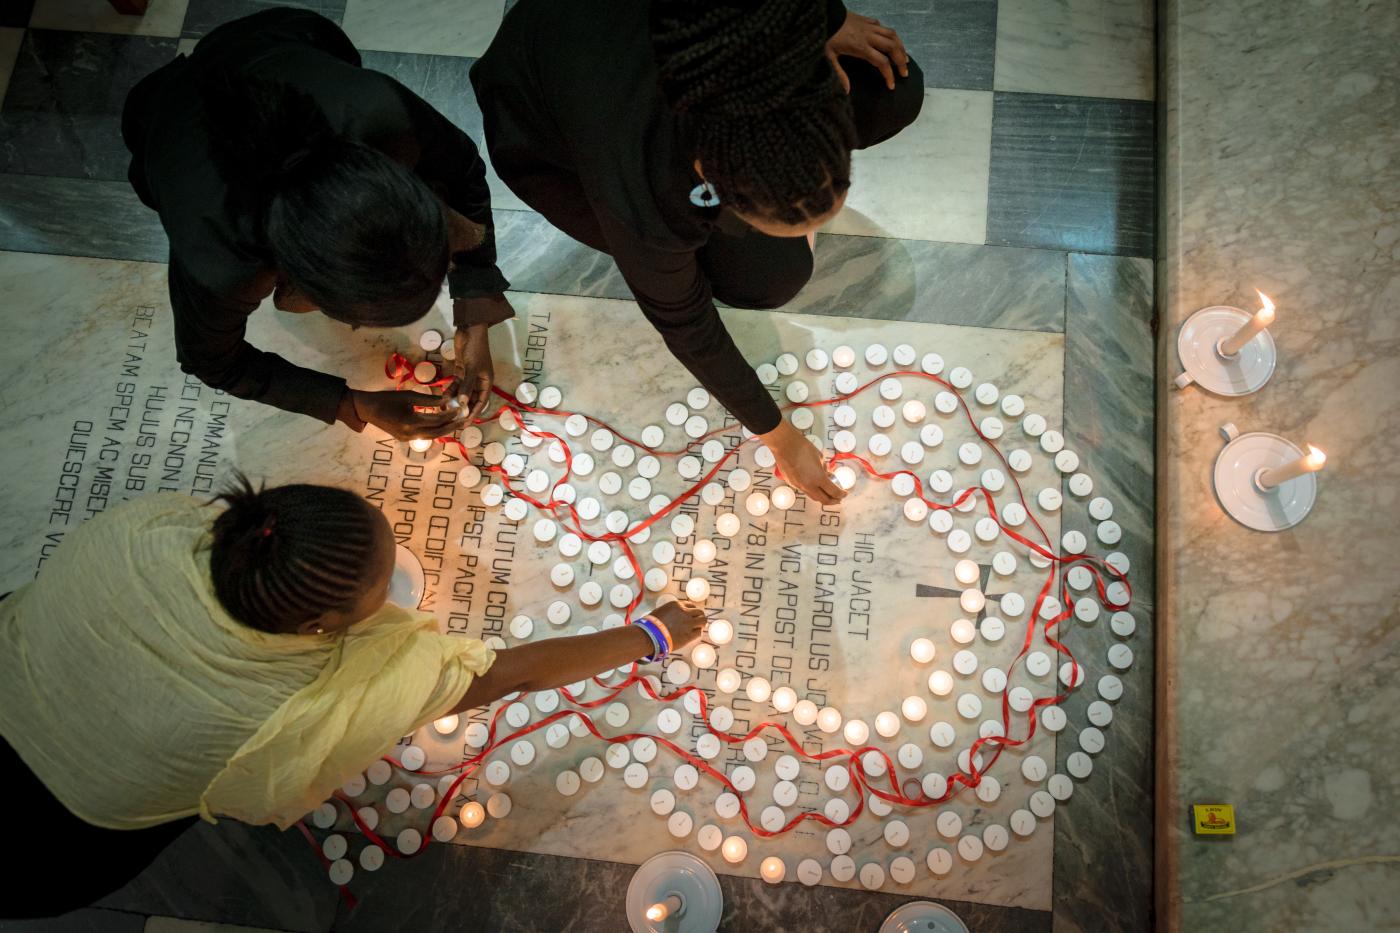 World AIDS Day prayer